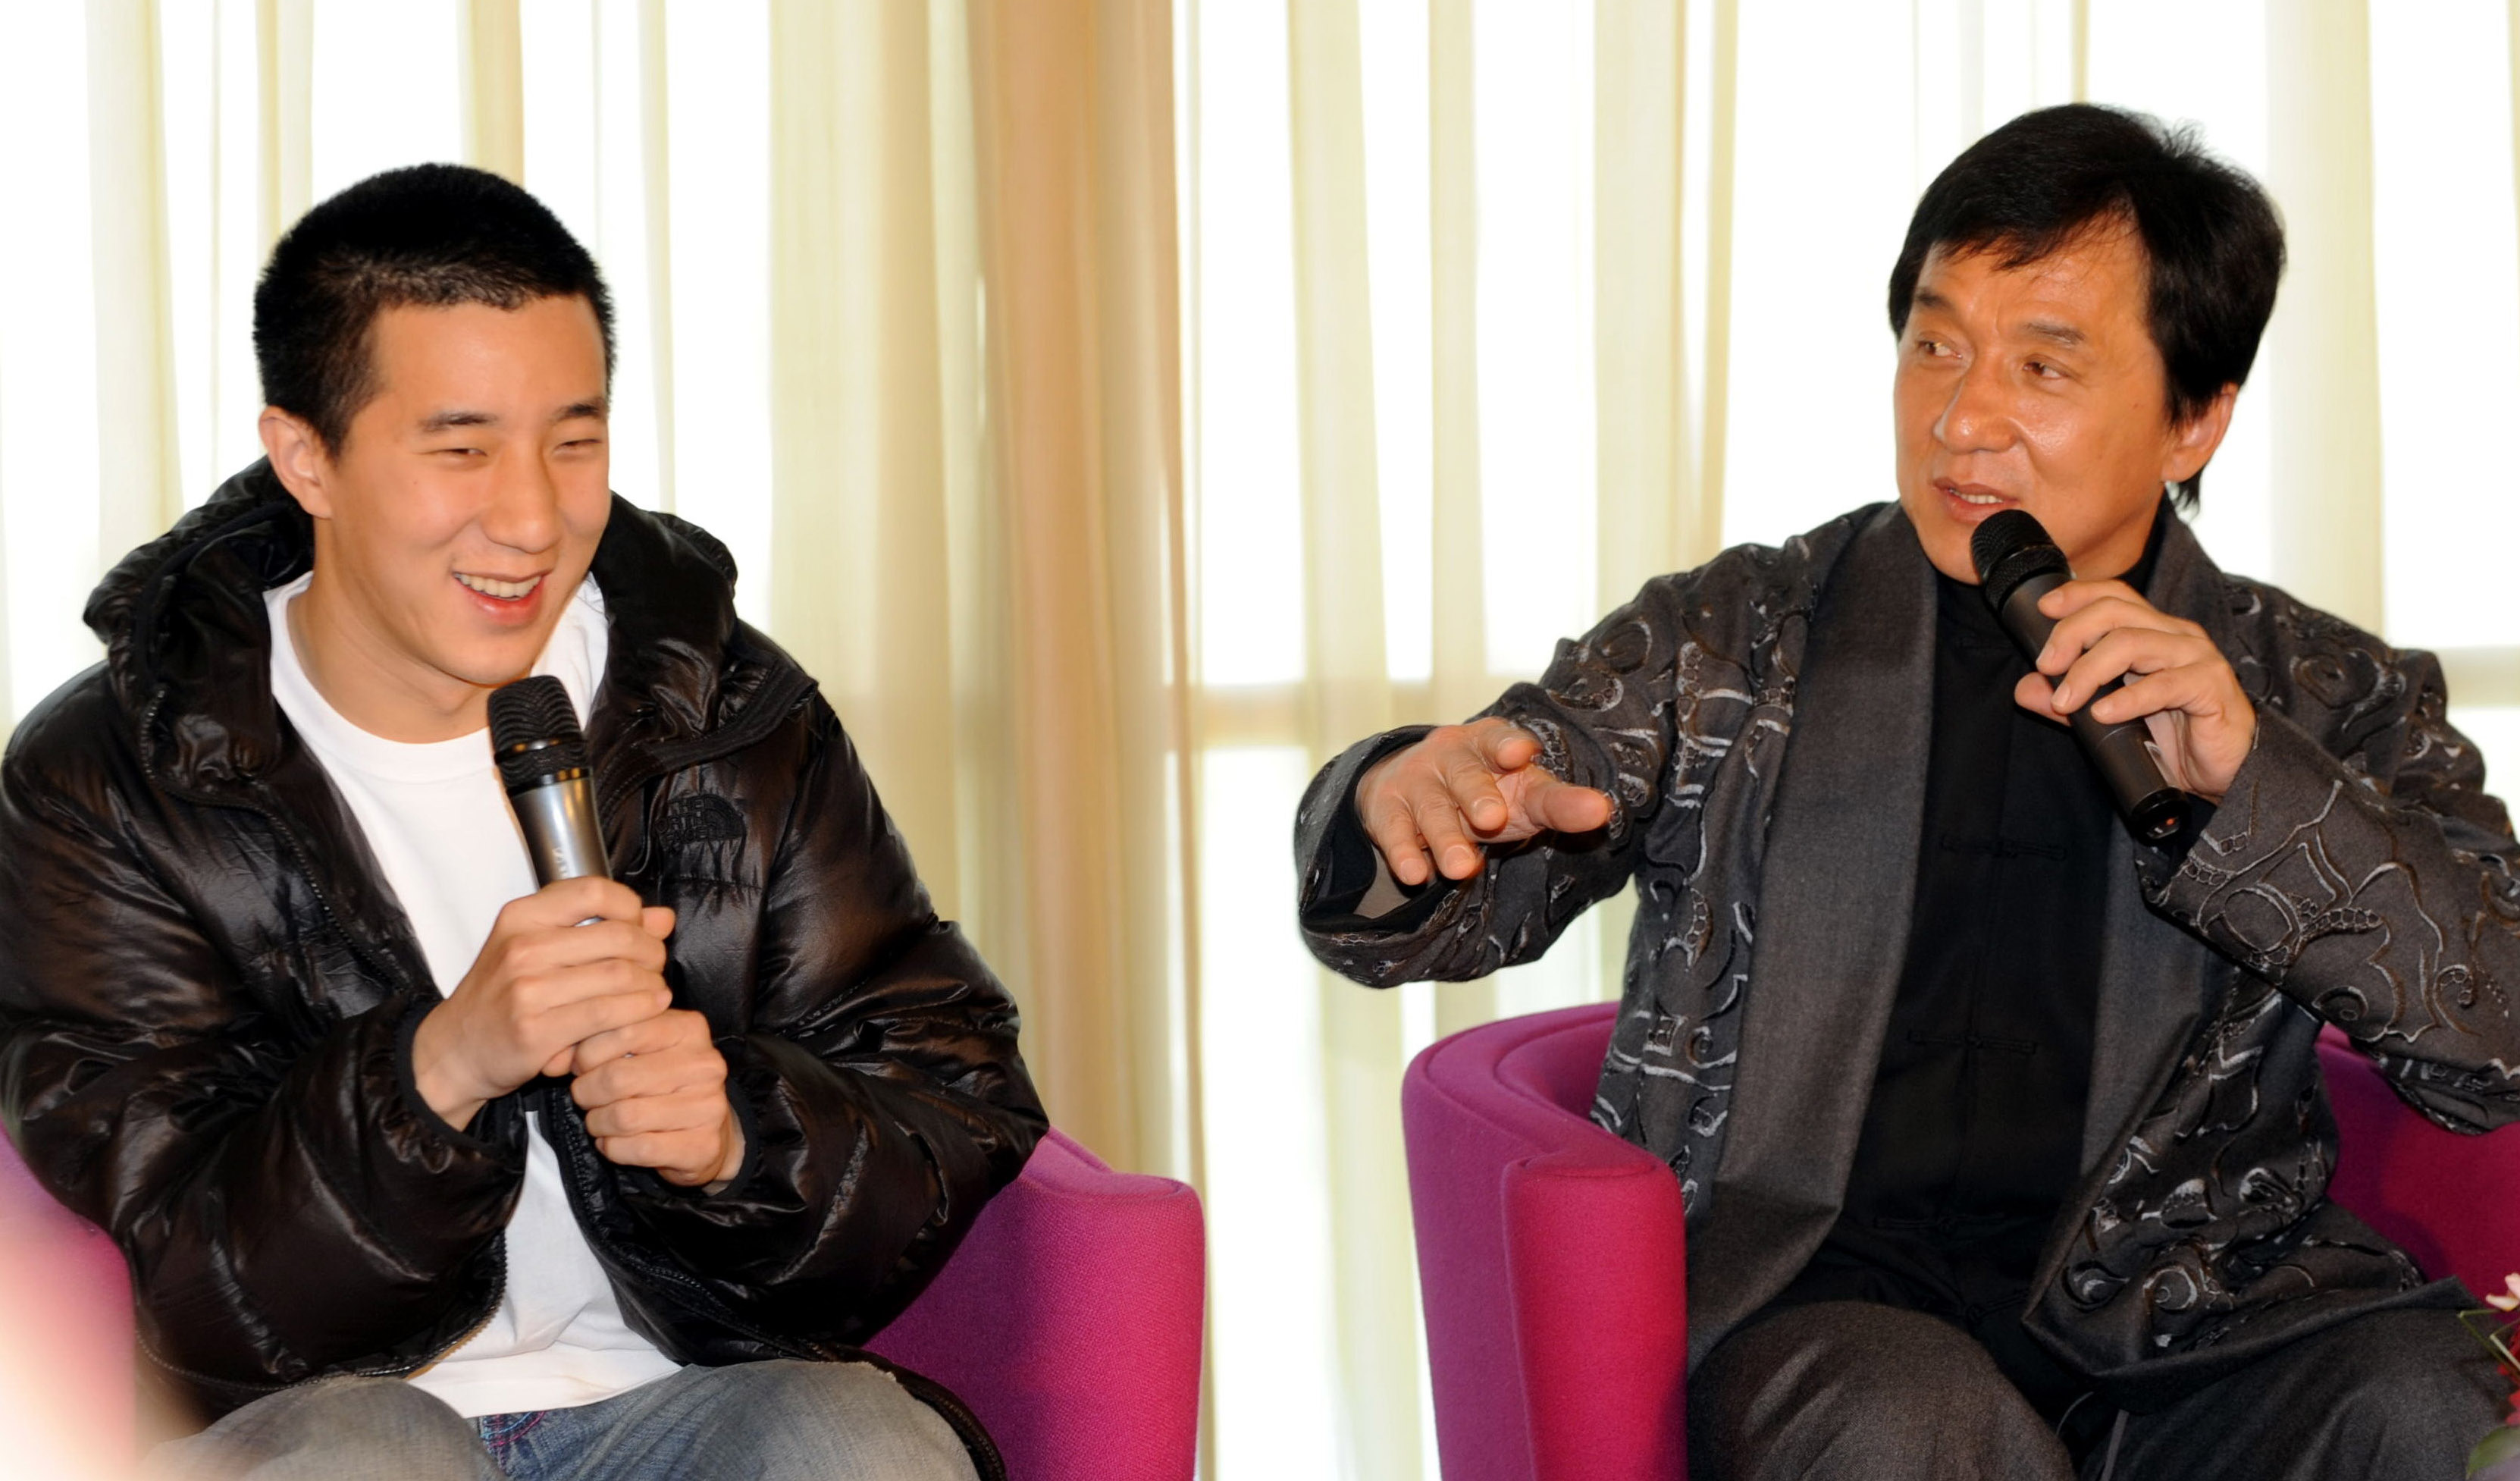 Jackie Chan et Jaycee Chan le 1er avril 2009 à Pékin, Chine | Source : Getty Images